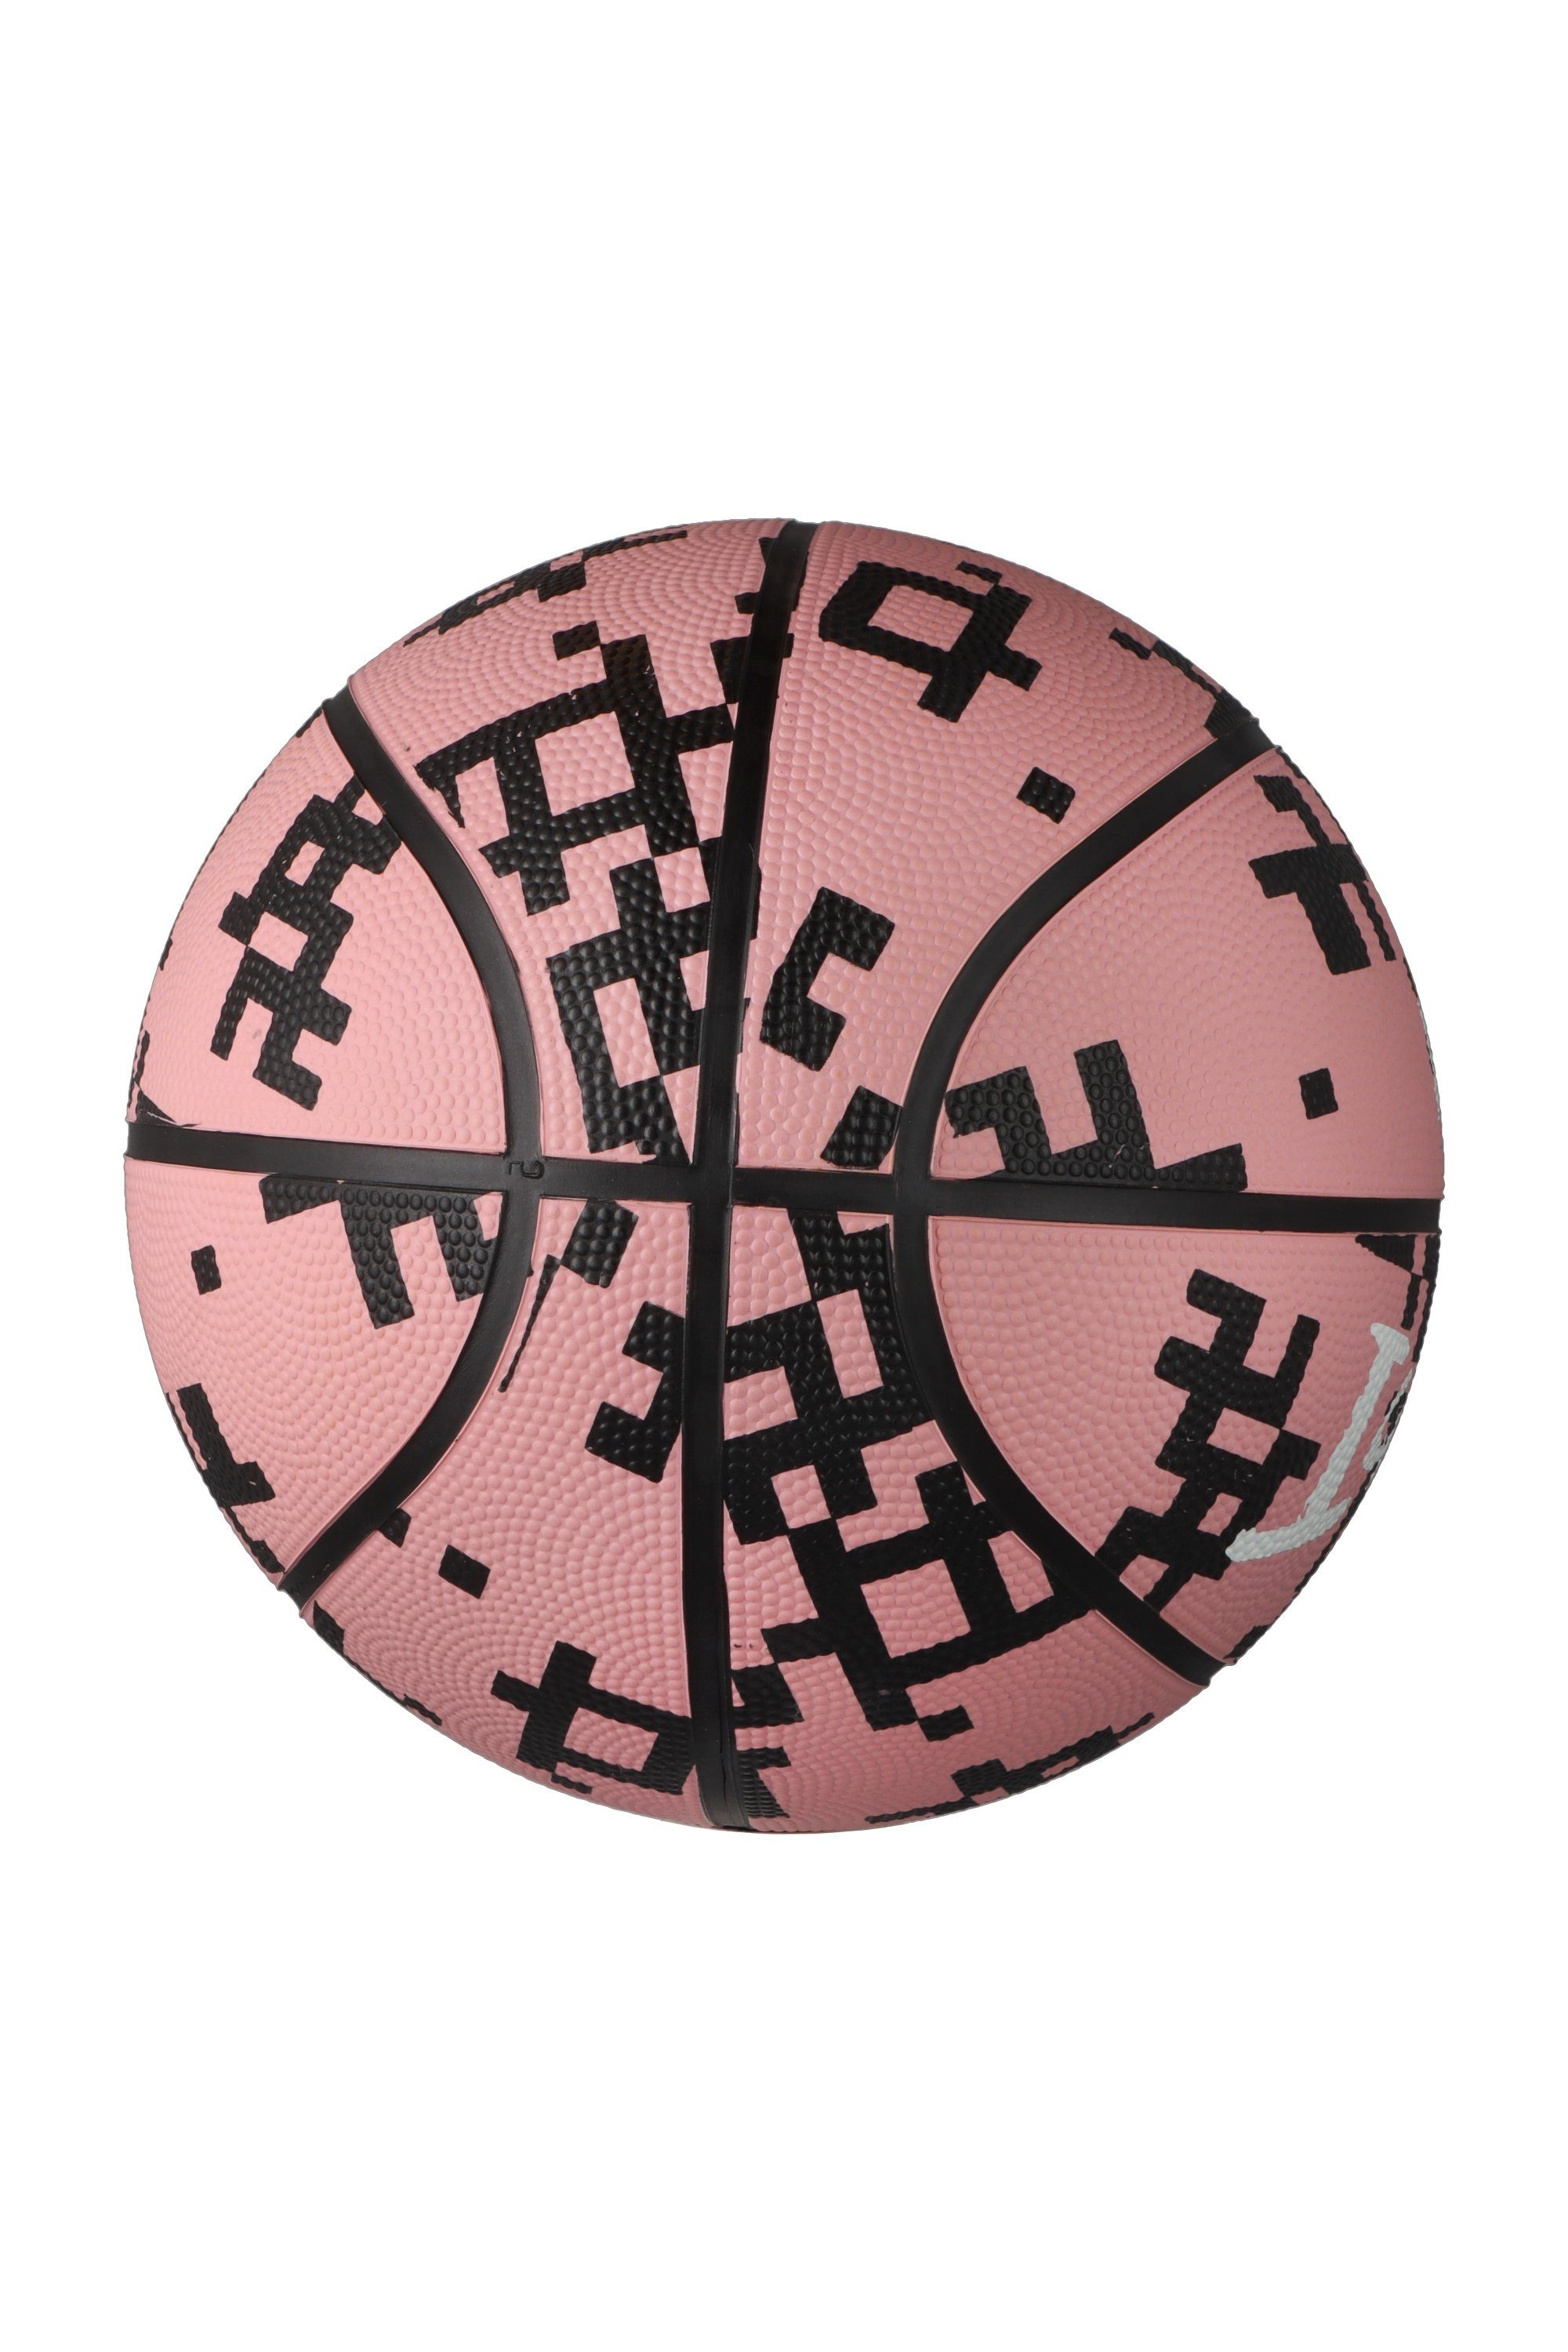 rosa Print coolem PEAK Color, mit Basketball